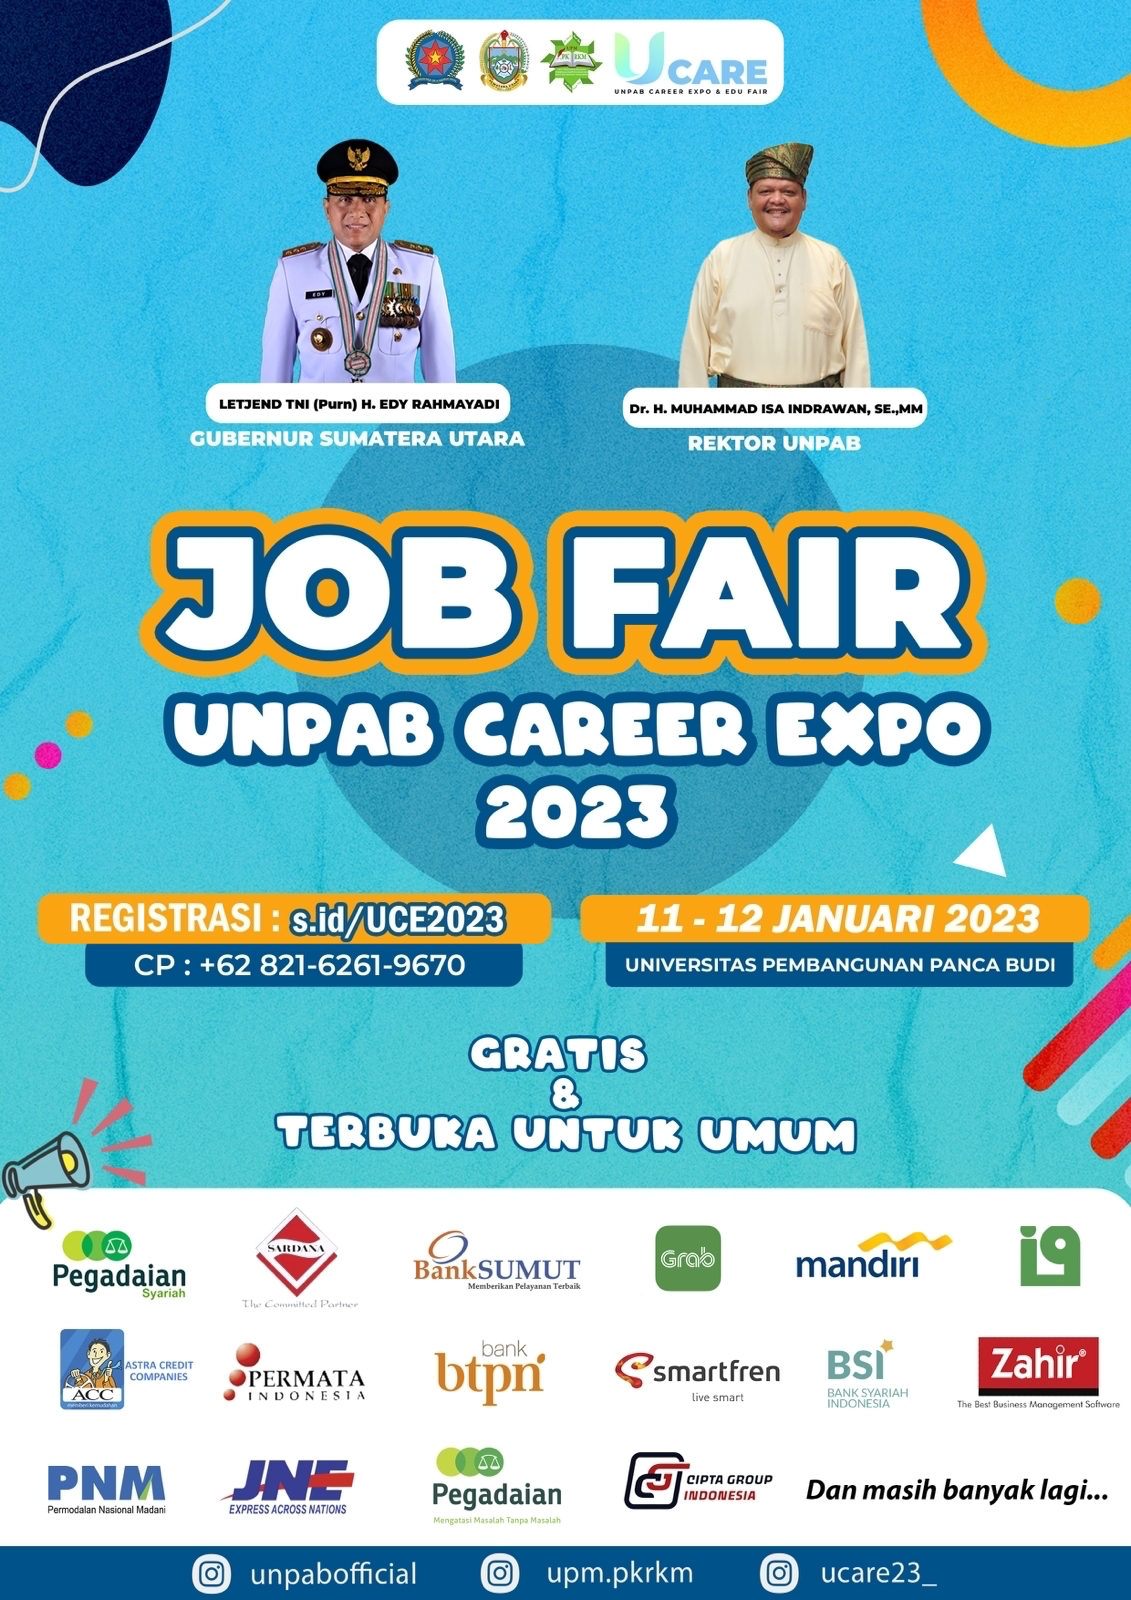 job-fair-unpab-career-expo-2023_34.jpg